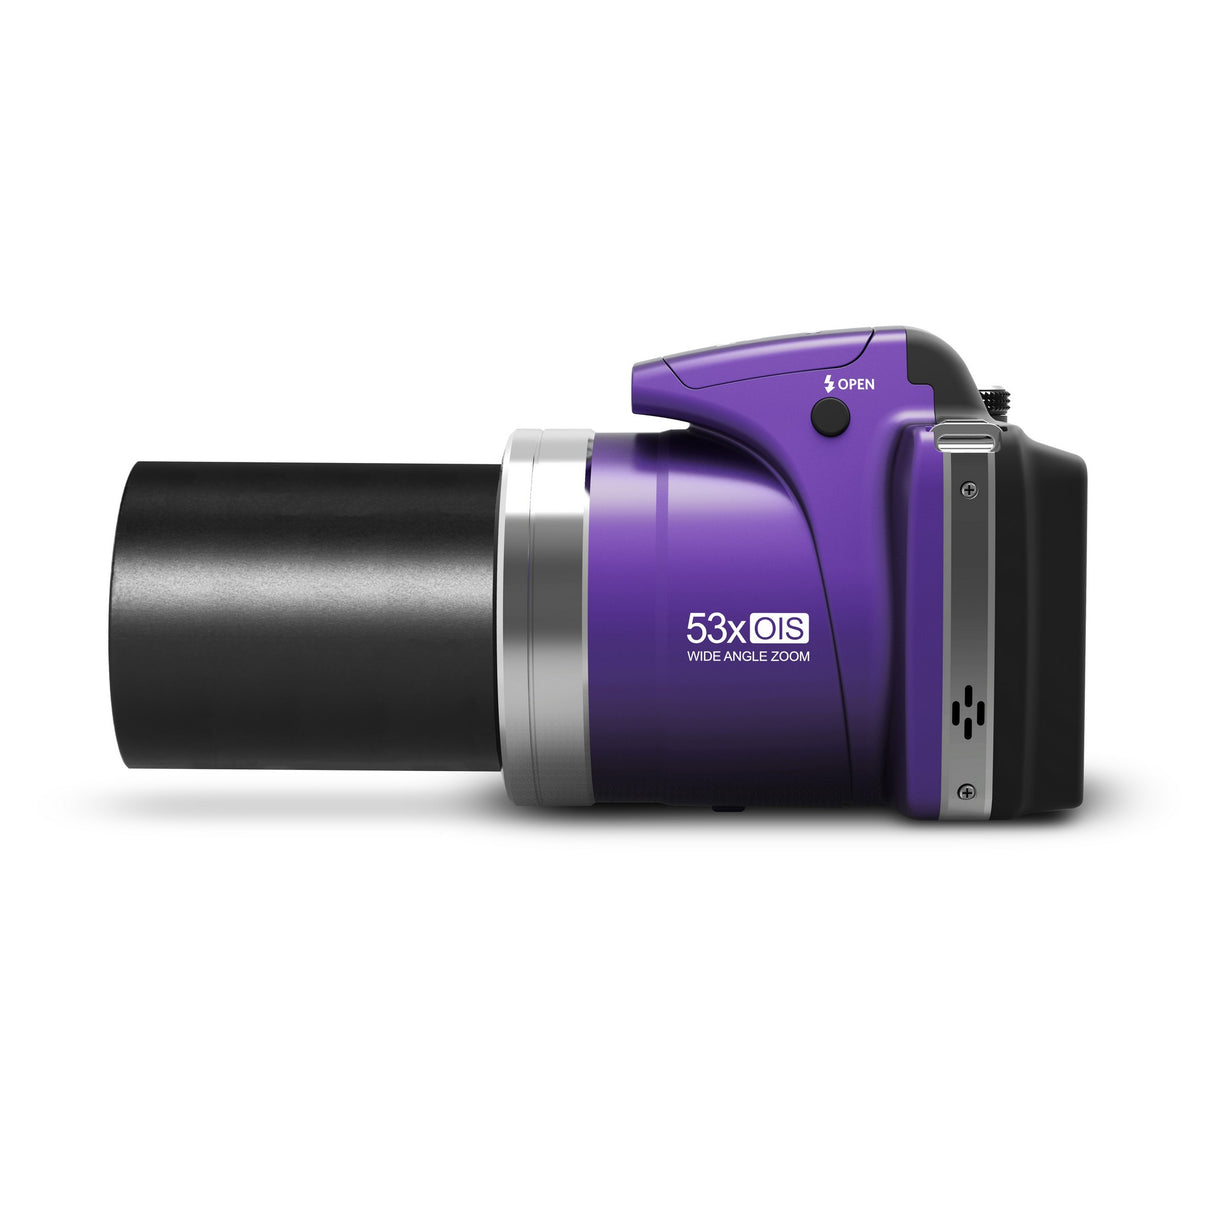 Minolta MN53Z 16 MP HD Bridge Digital Camera with 53x Optical Zoom, Purple